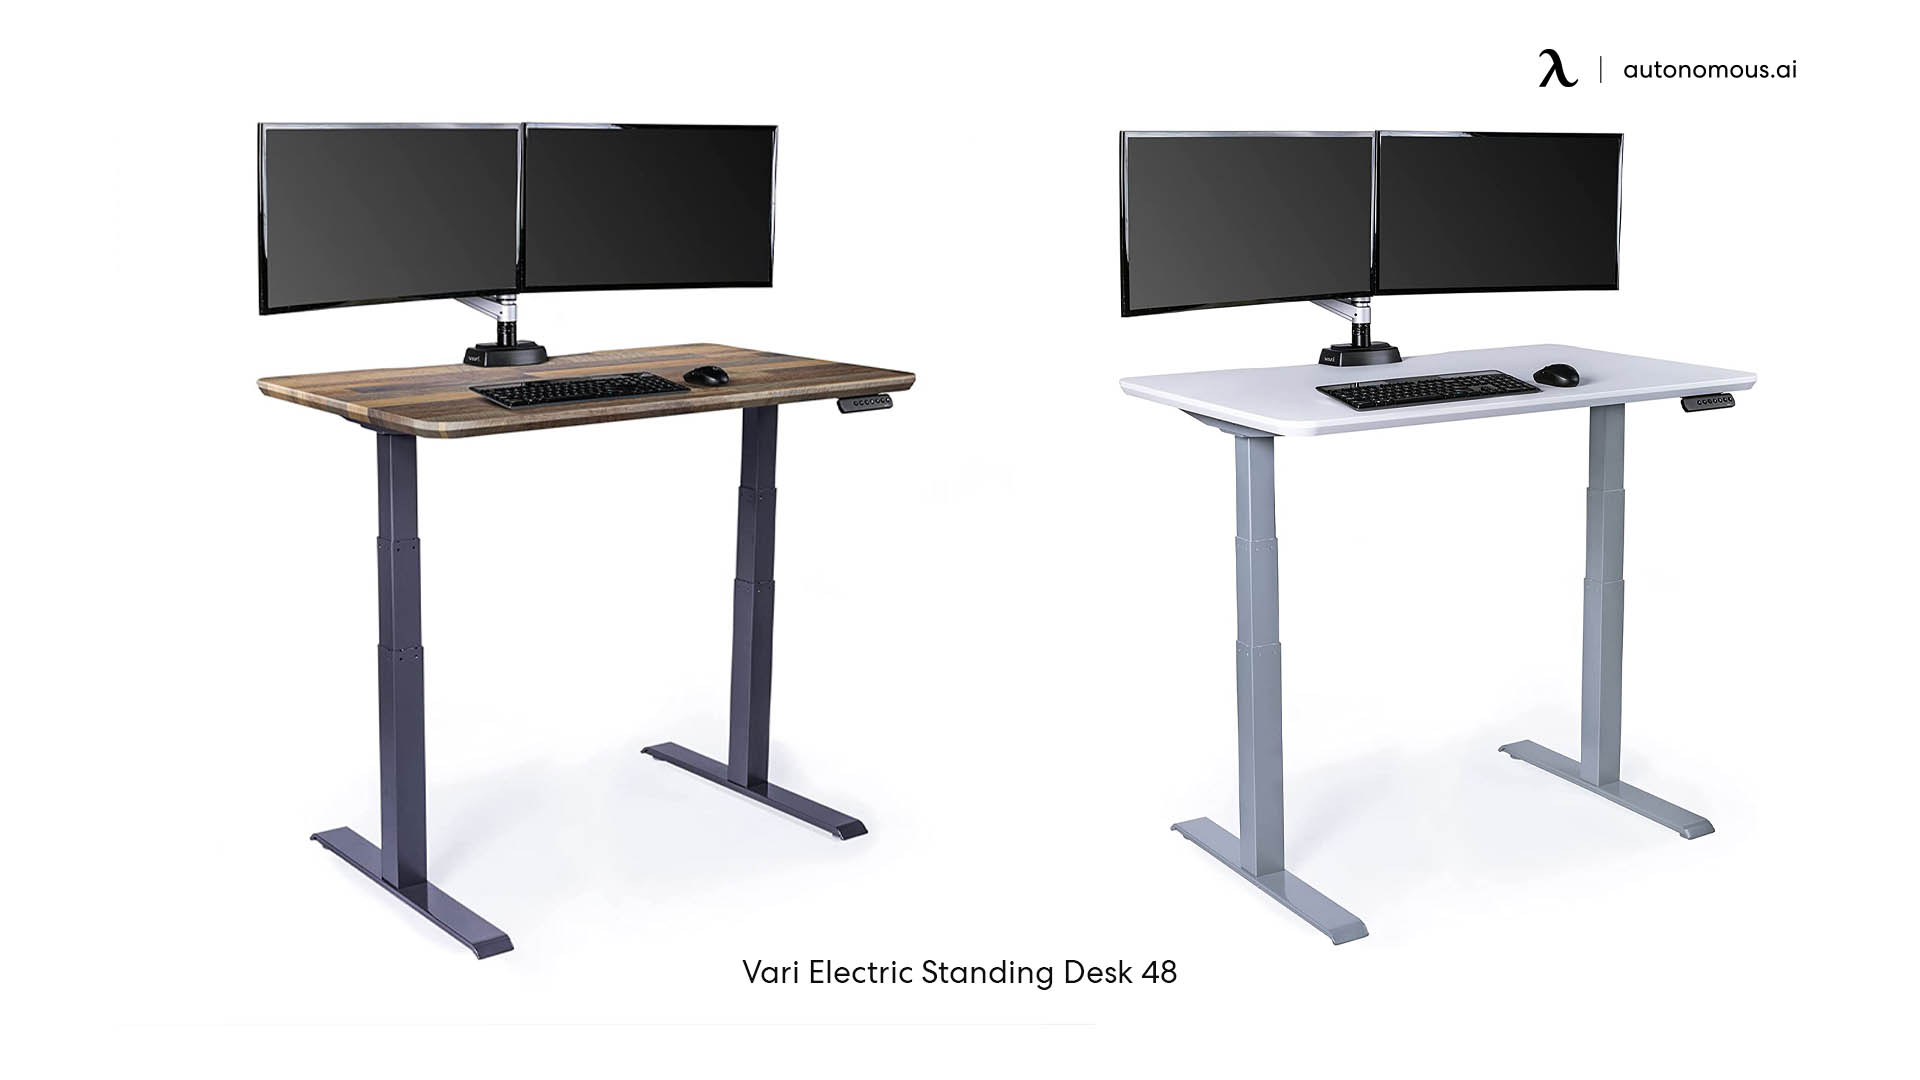 Vari Electric Standing Desk 48 small standing desk